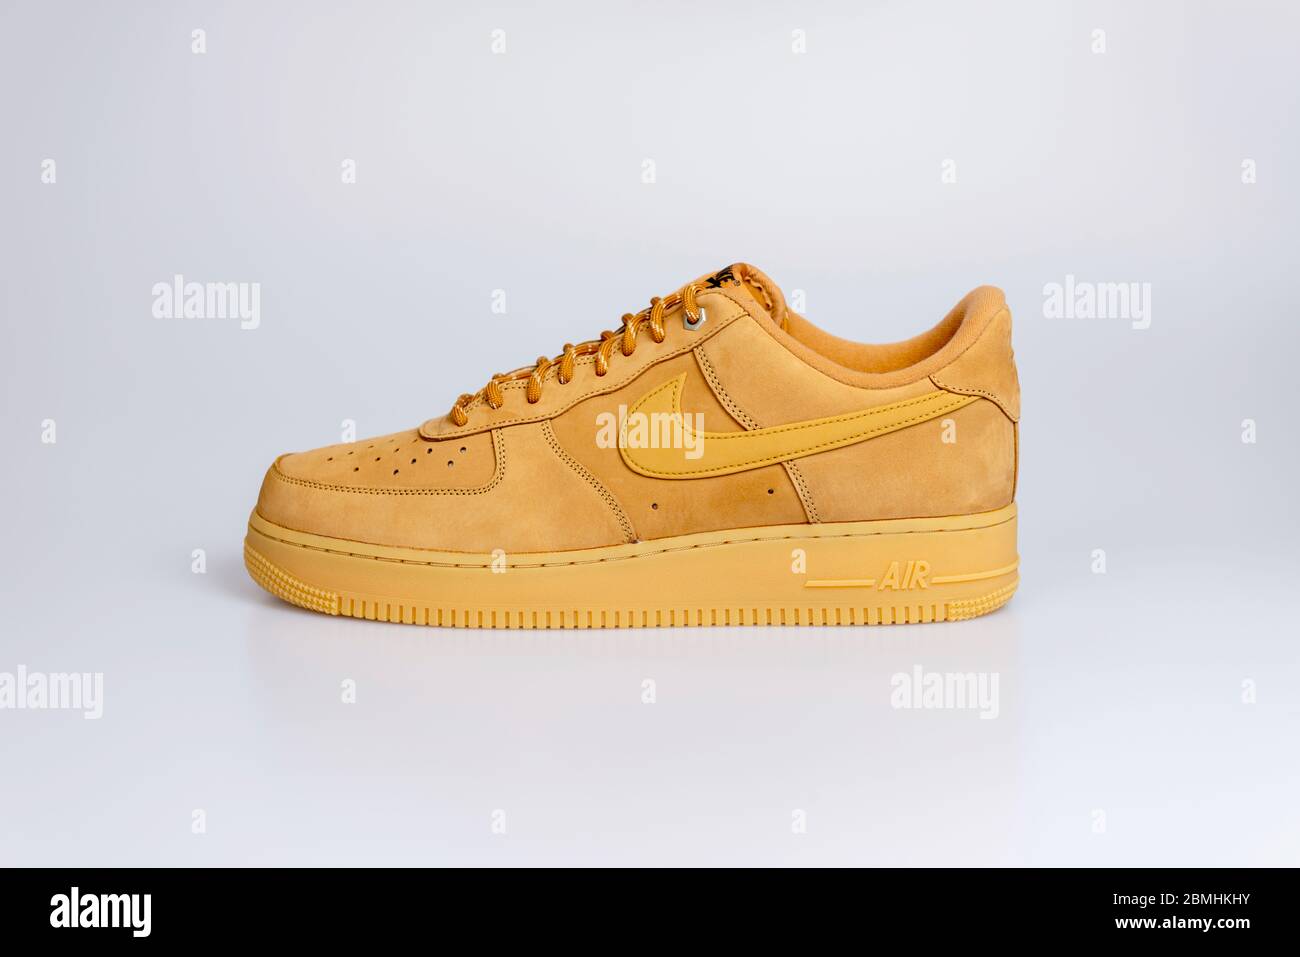 Sneaker Nike Air Force marrone chiaro su sfondo bianco Foto stock - Alamy